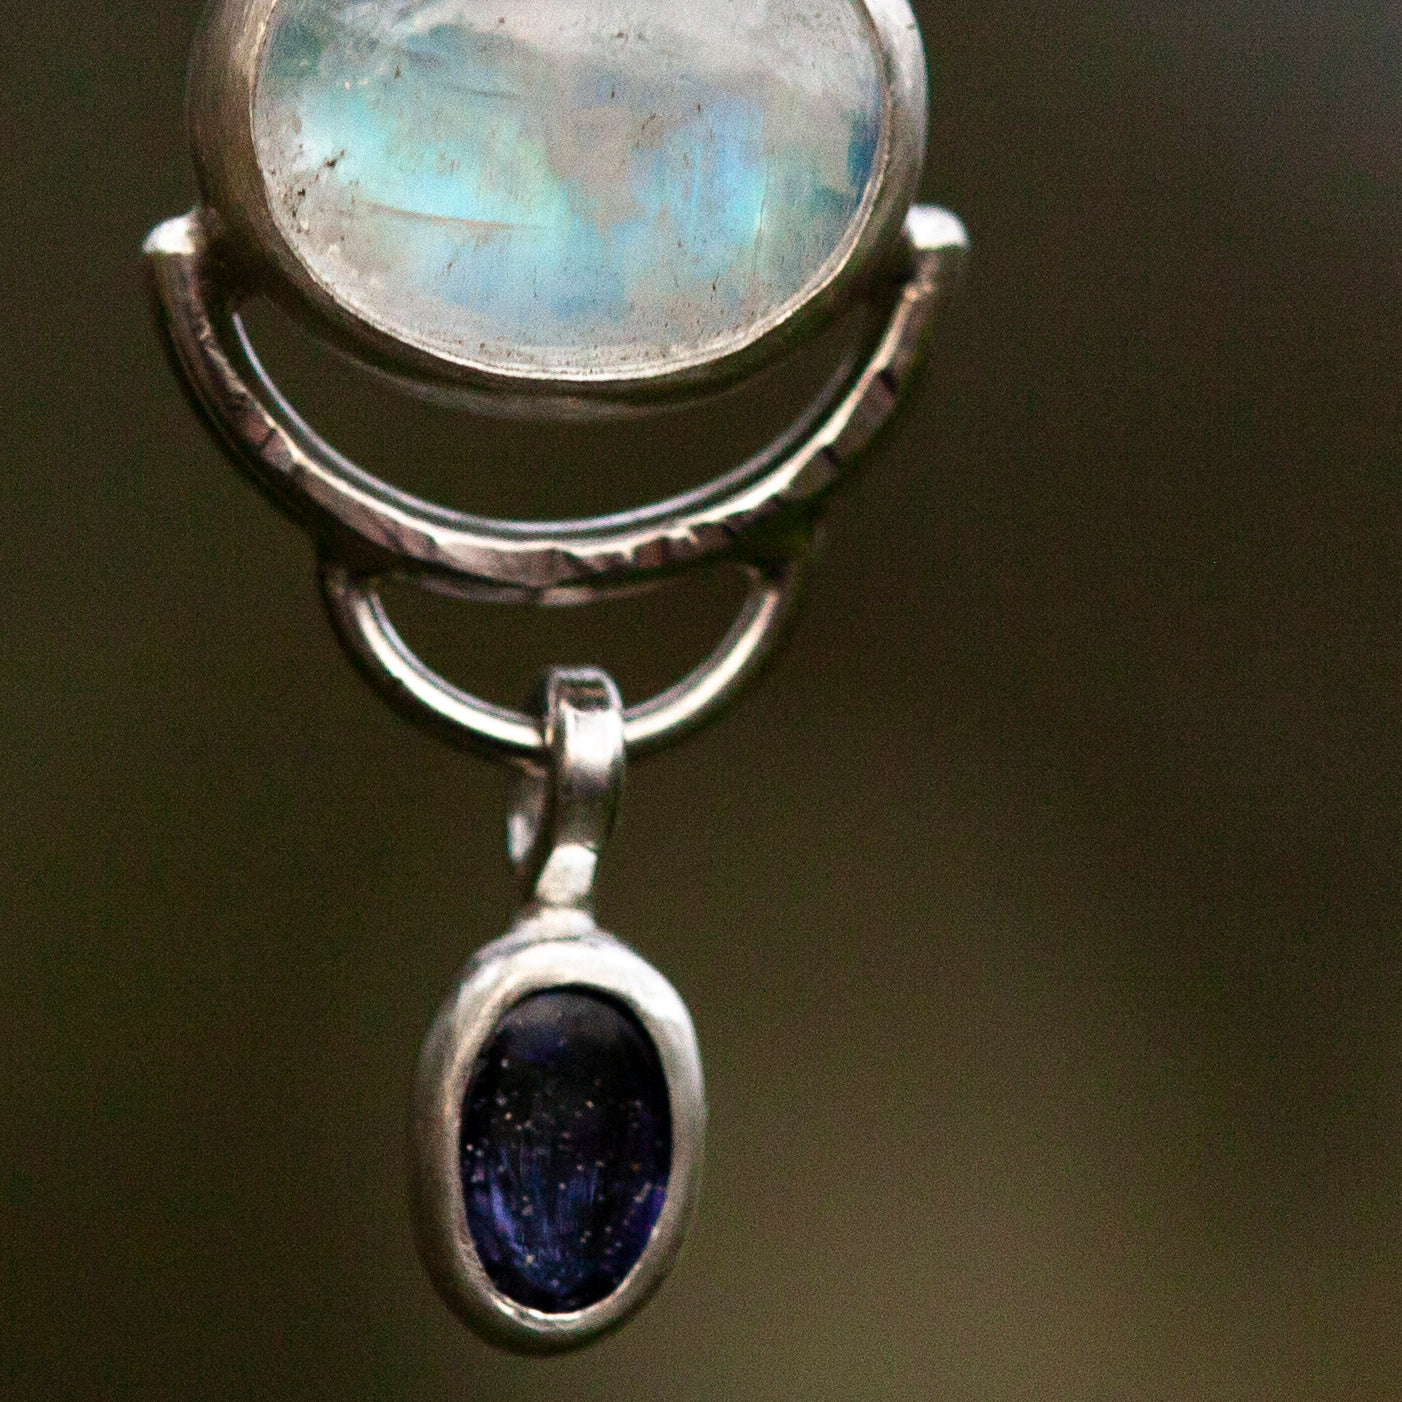 OOAK • Osmose pendant #2 ~ silver, labradorite and.. amethyst? (ready to ship)